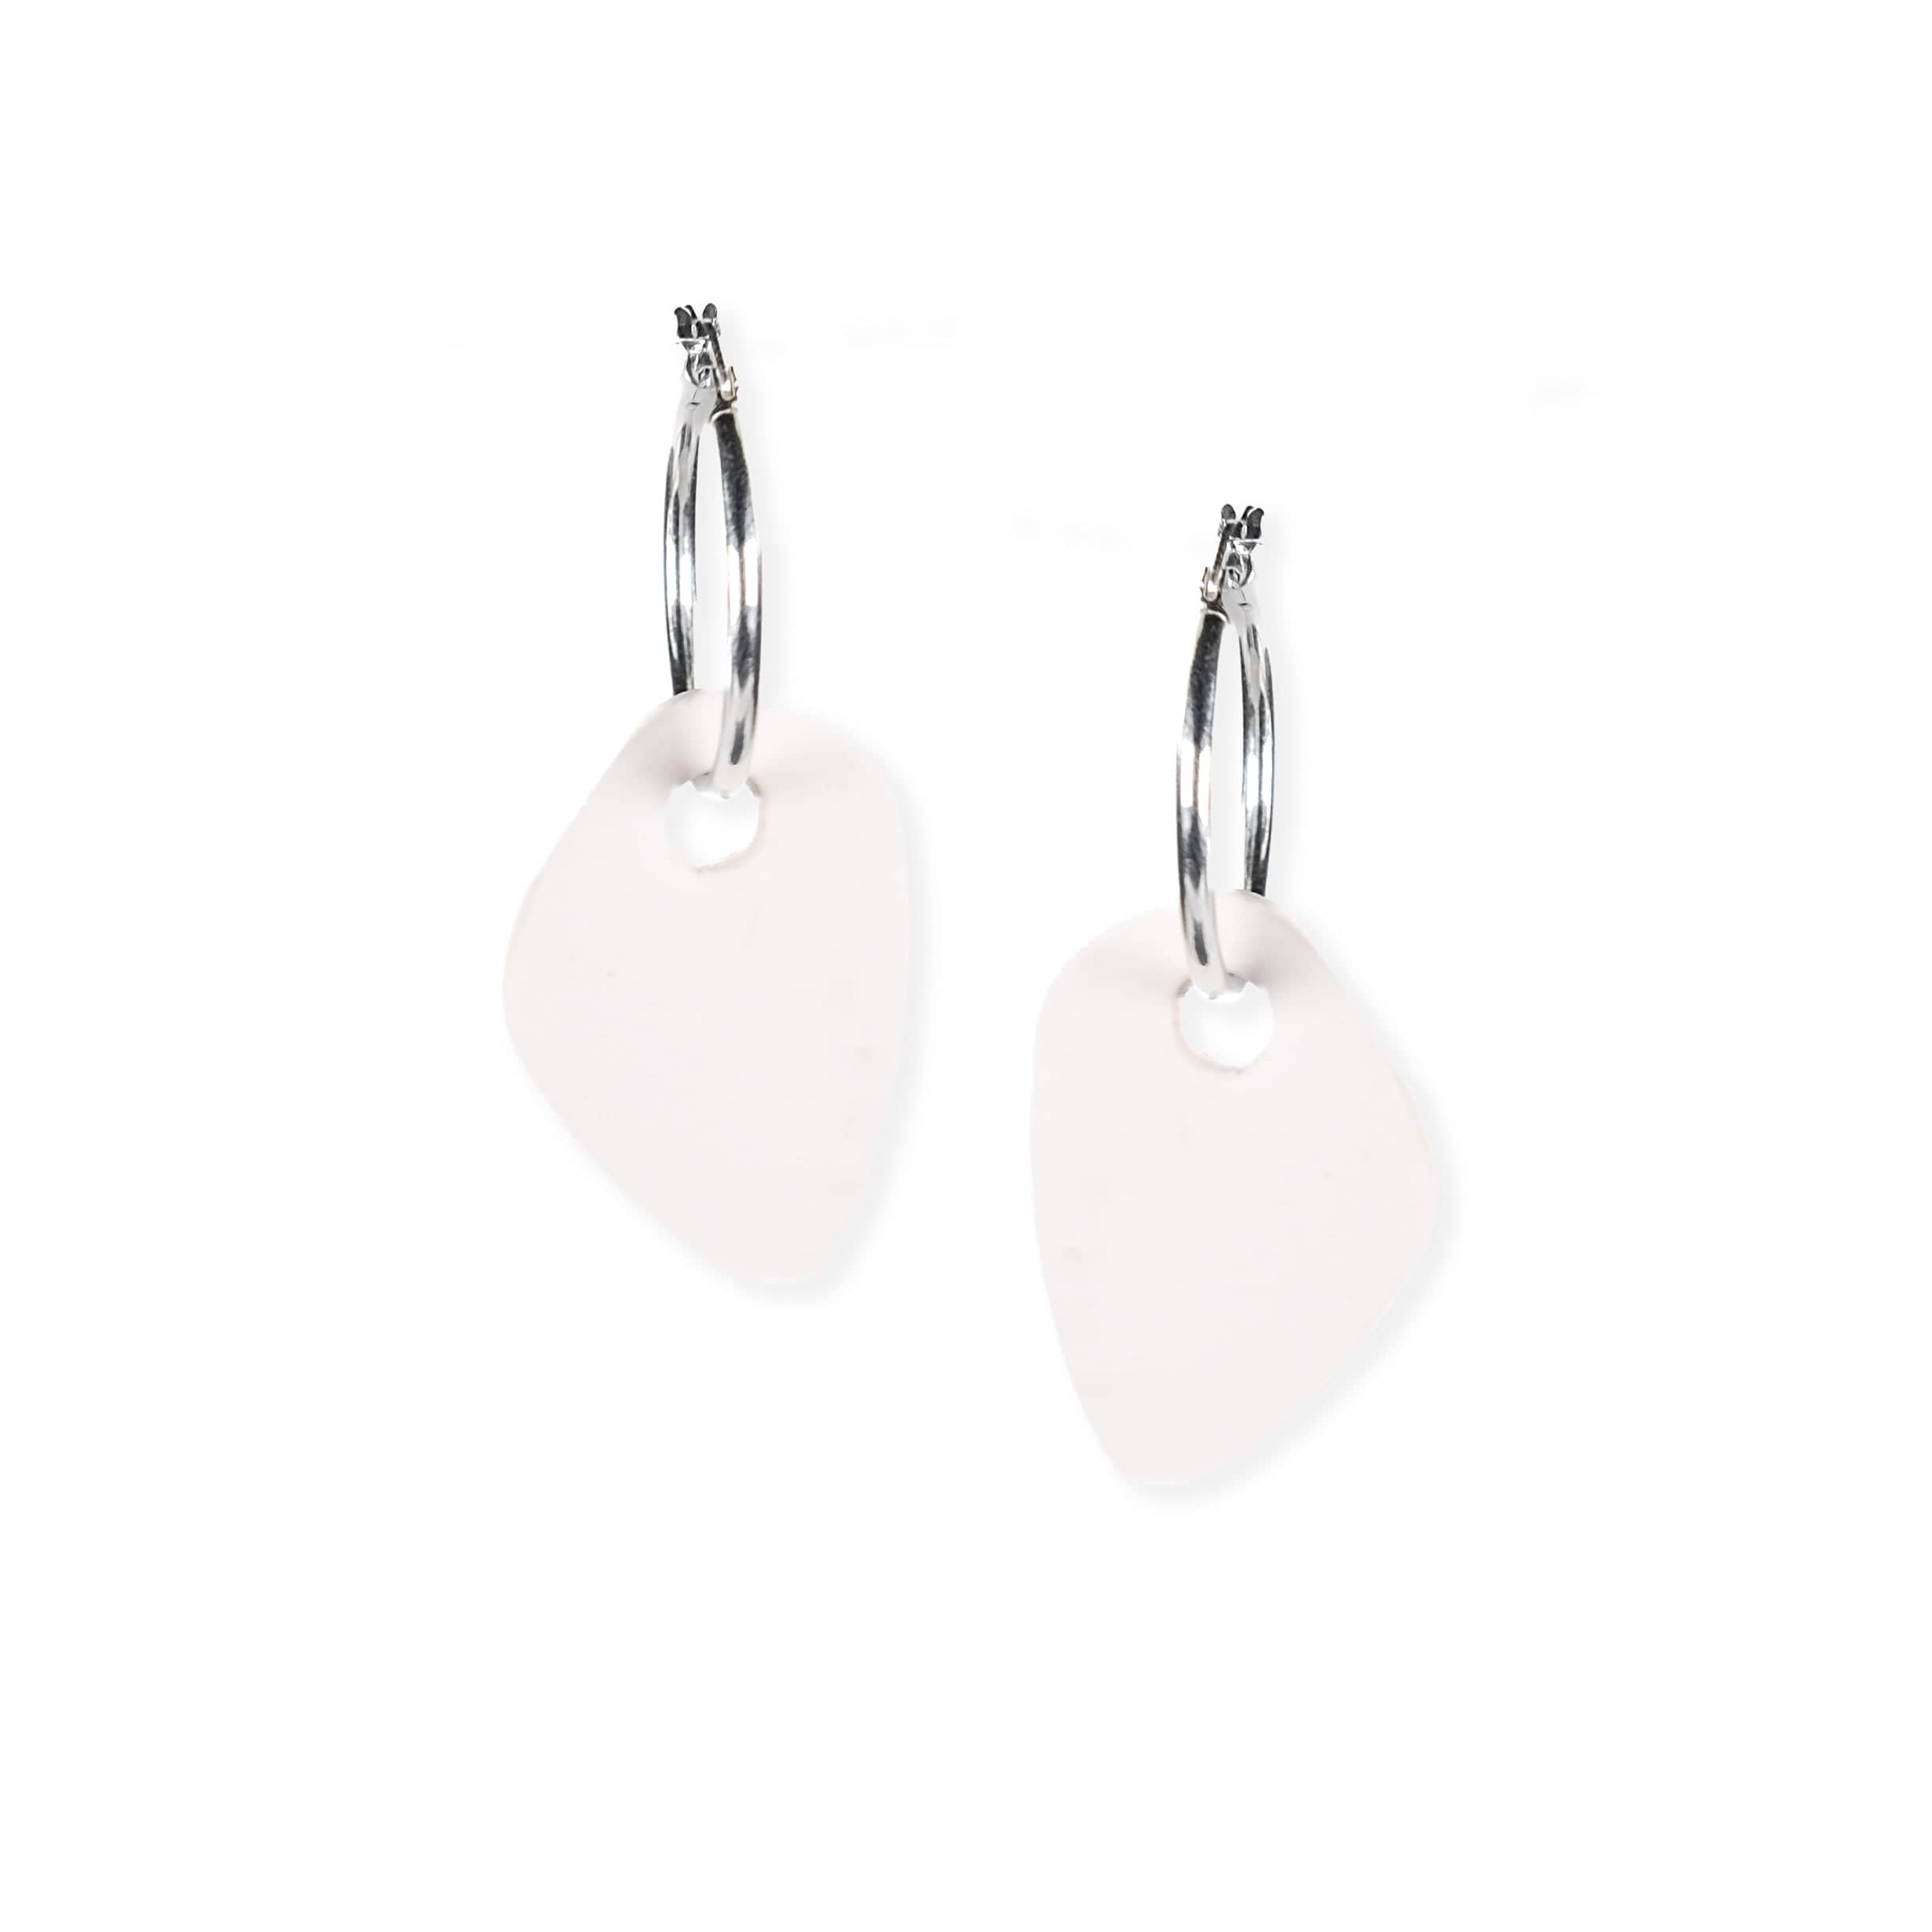 Organic shapes, hoop charm dangly earrings Calder inspired in white #color_white